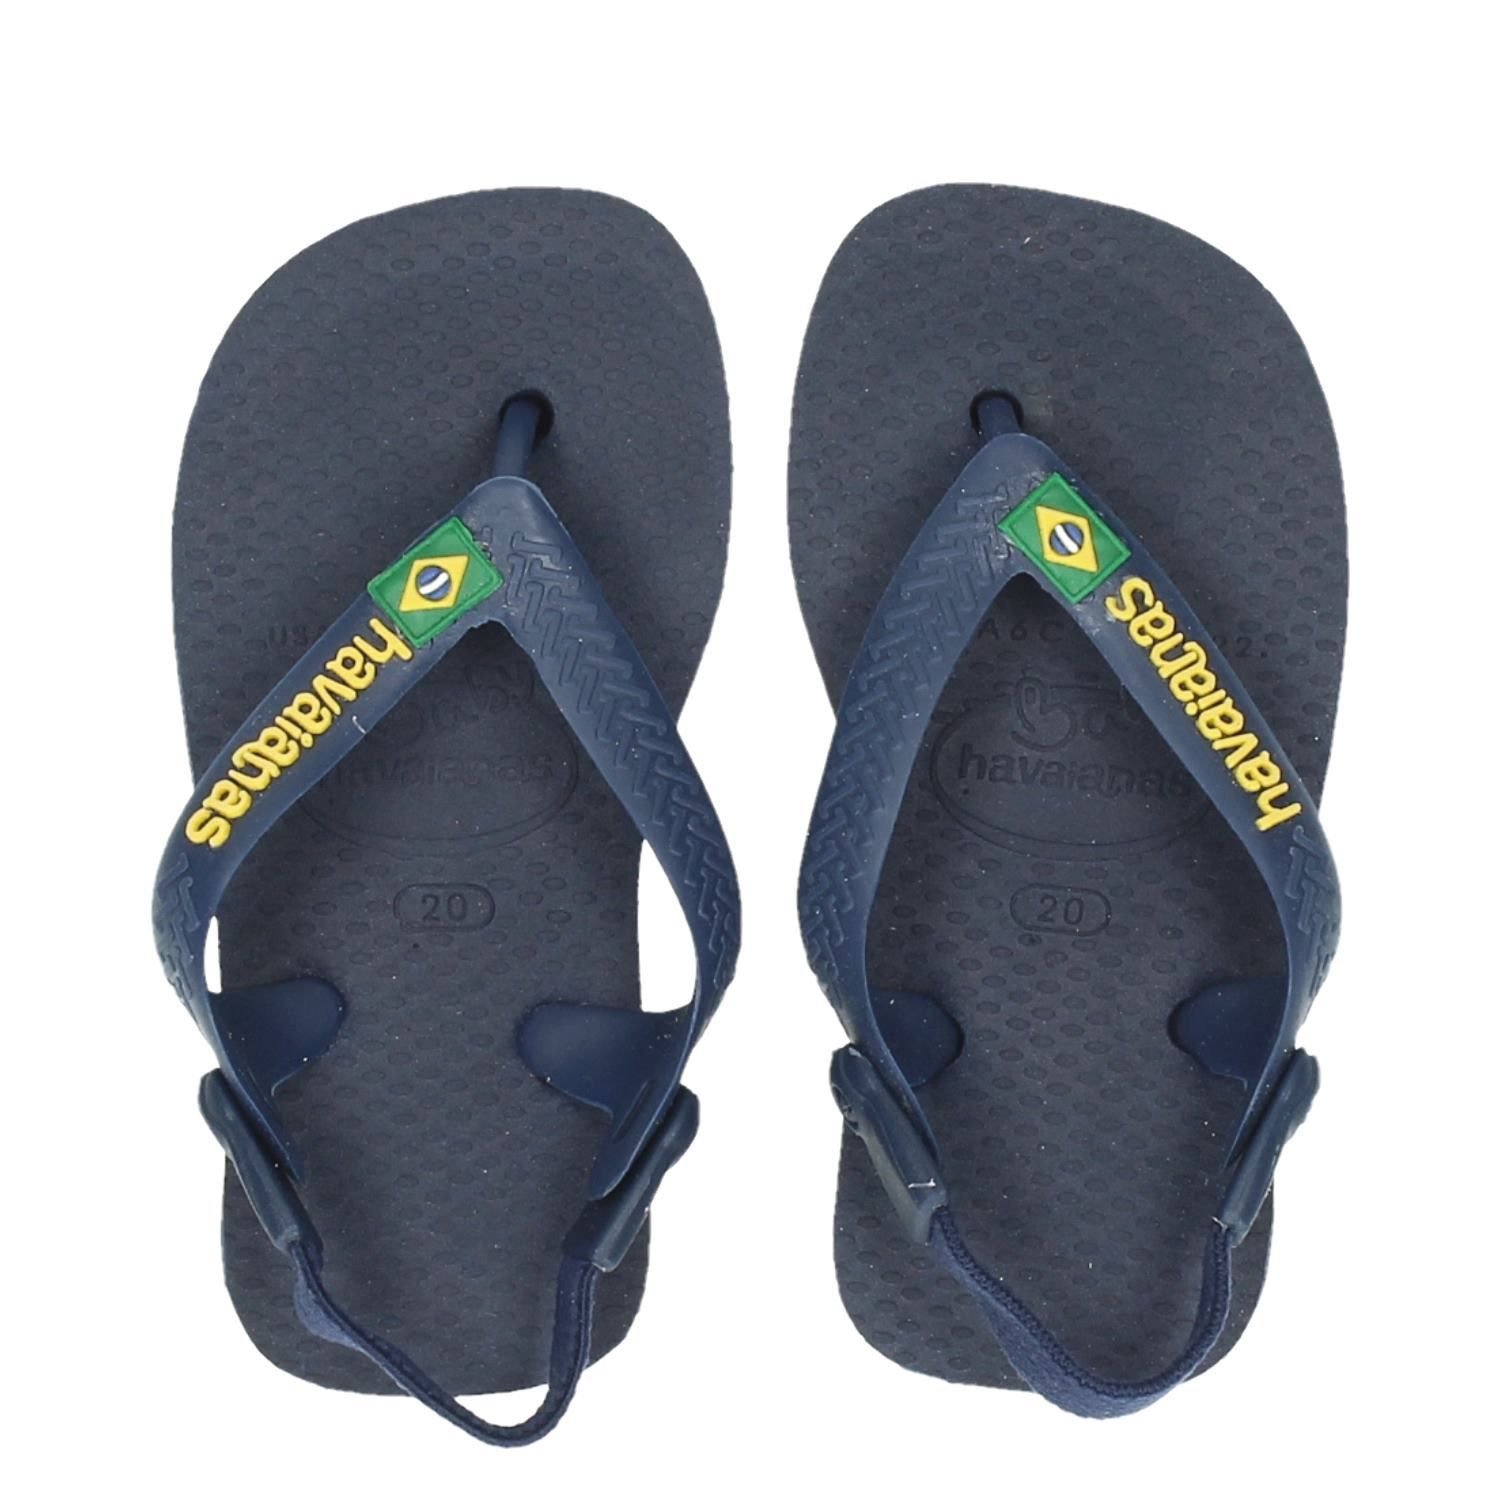 Productie boekje oase Havaianas slippers donkerblauw Jongens ( - baby brasil logo4140577) -  Junior Steps